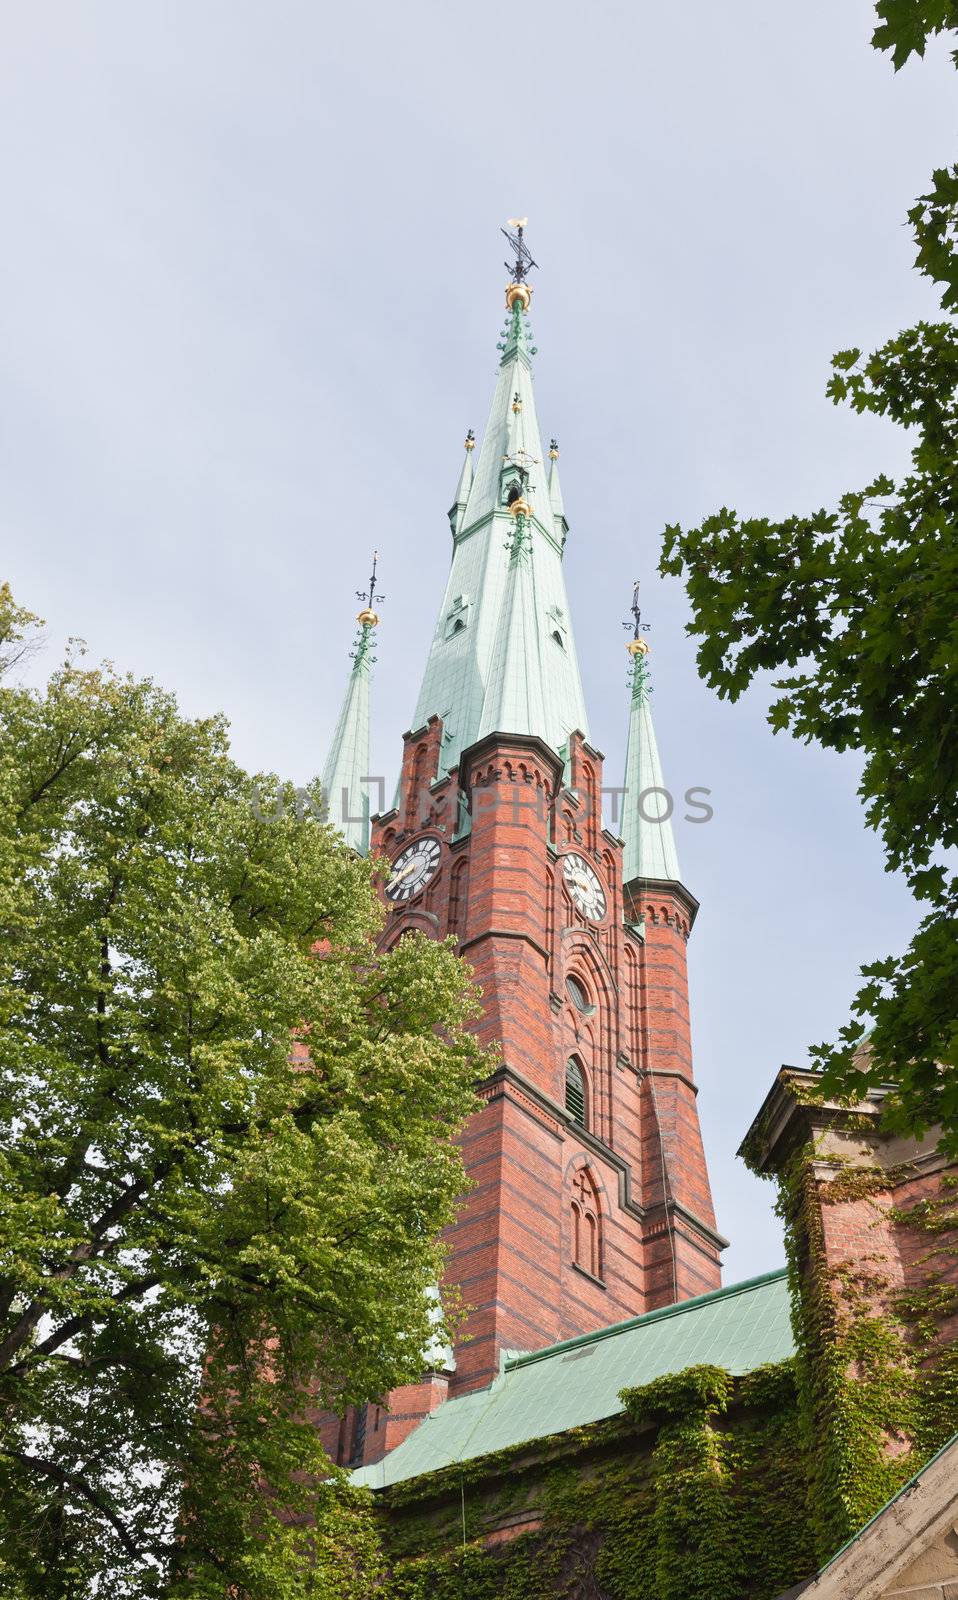 The Clara Kyrka church in central Stockholm by gary718